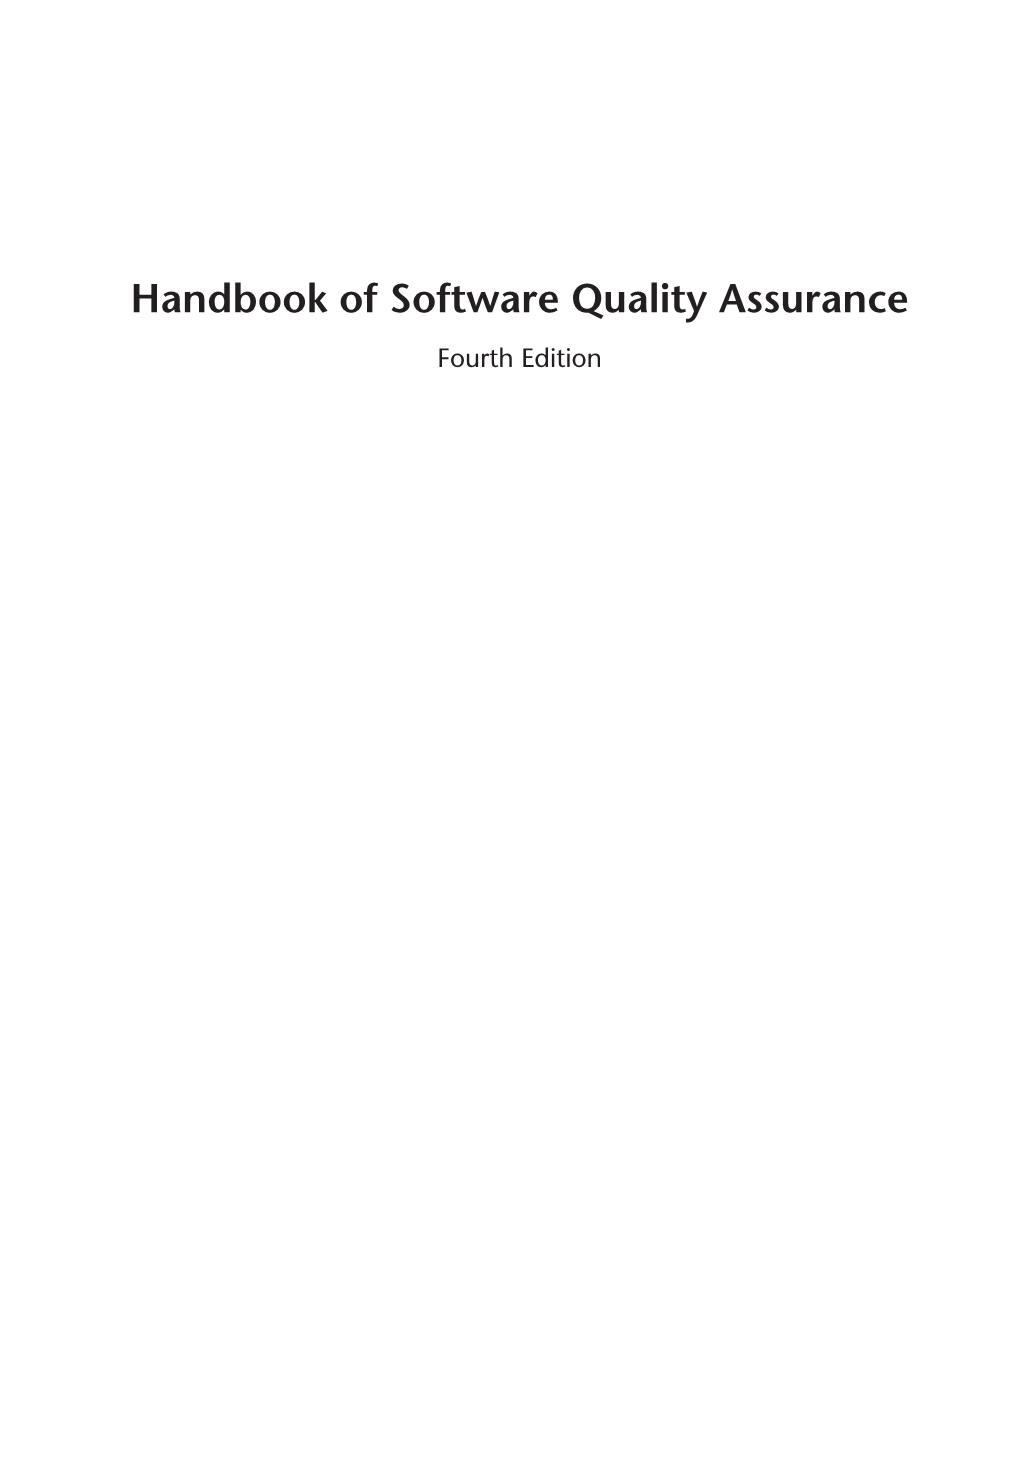 Handbook of Software Quality Assurance, 4Th